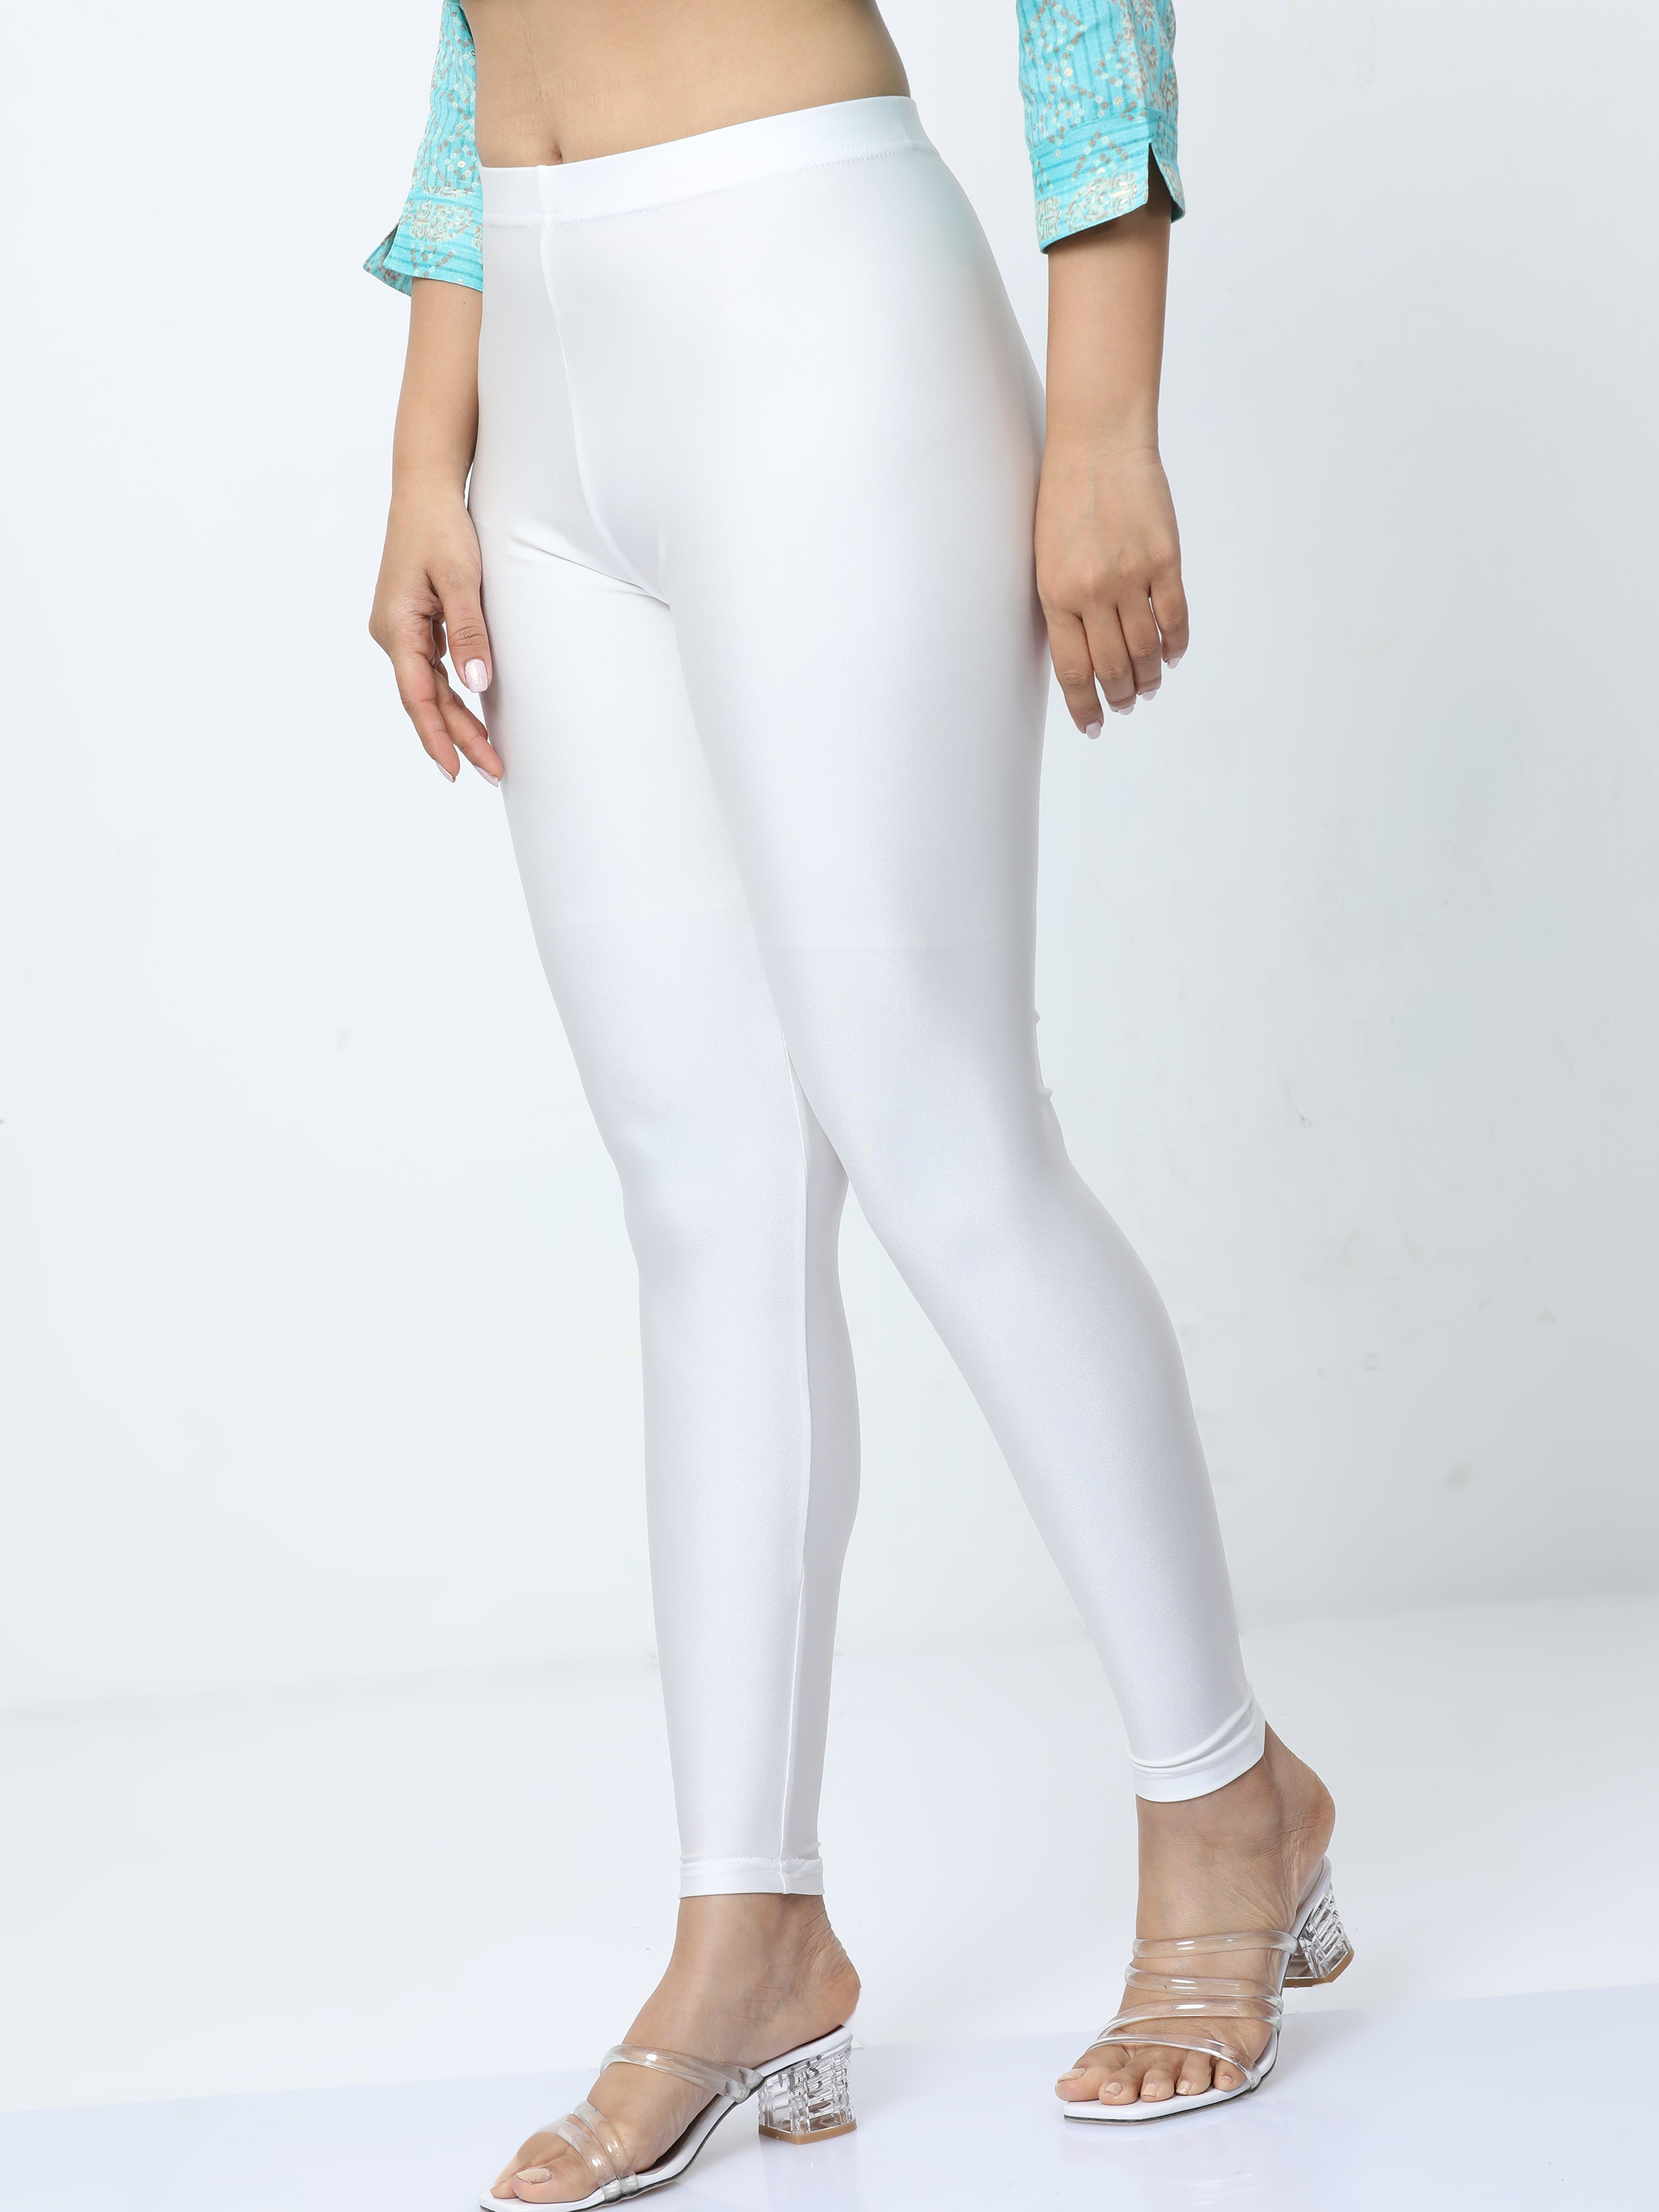 White Color Legging Ankle Length – LGM Fashions